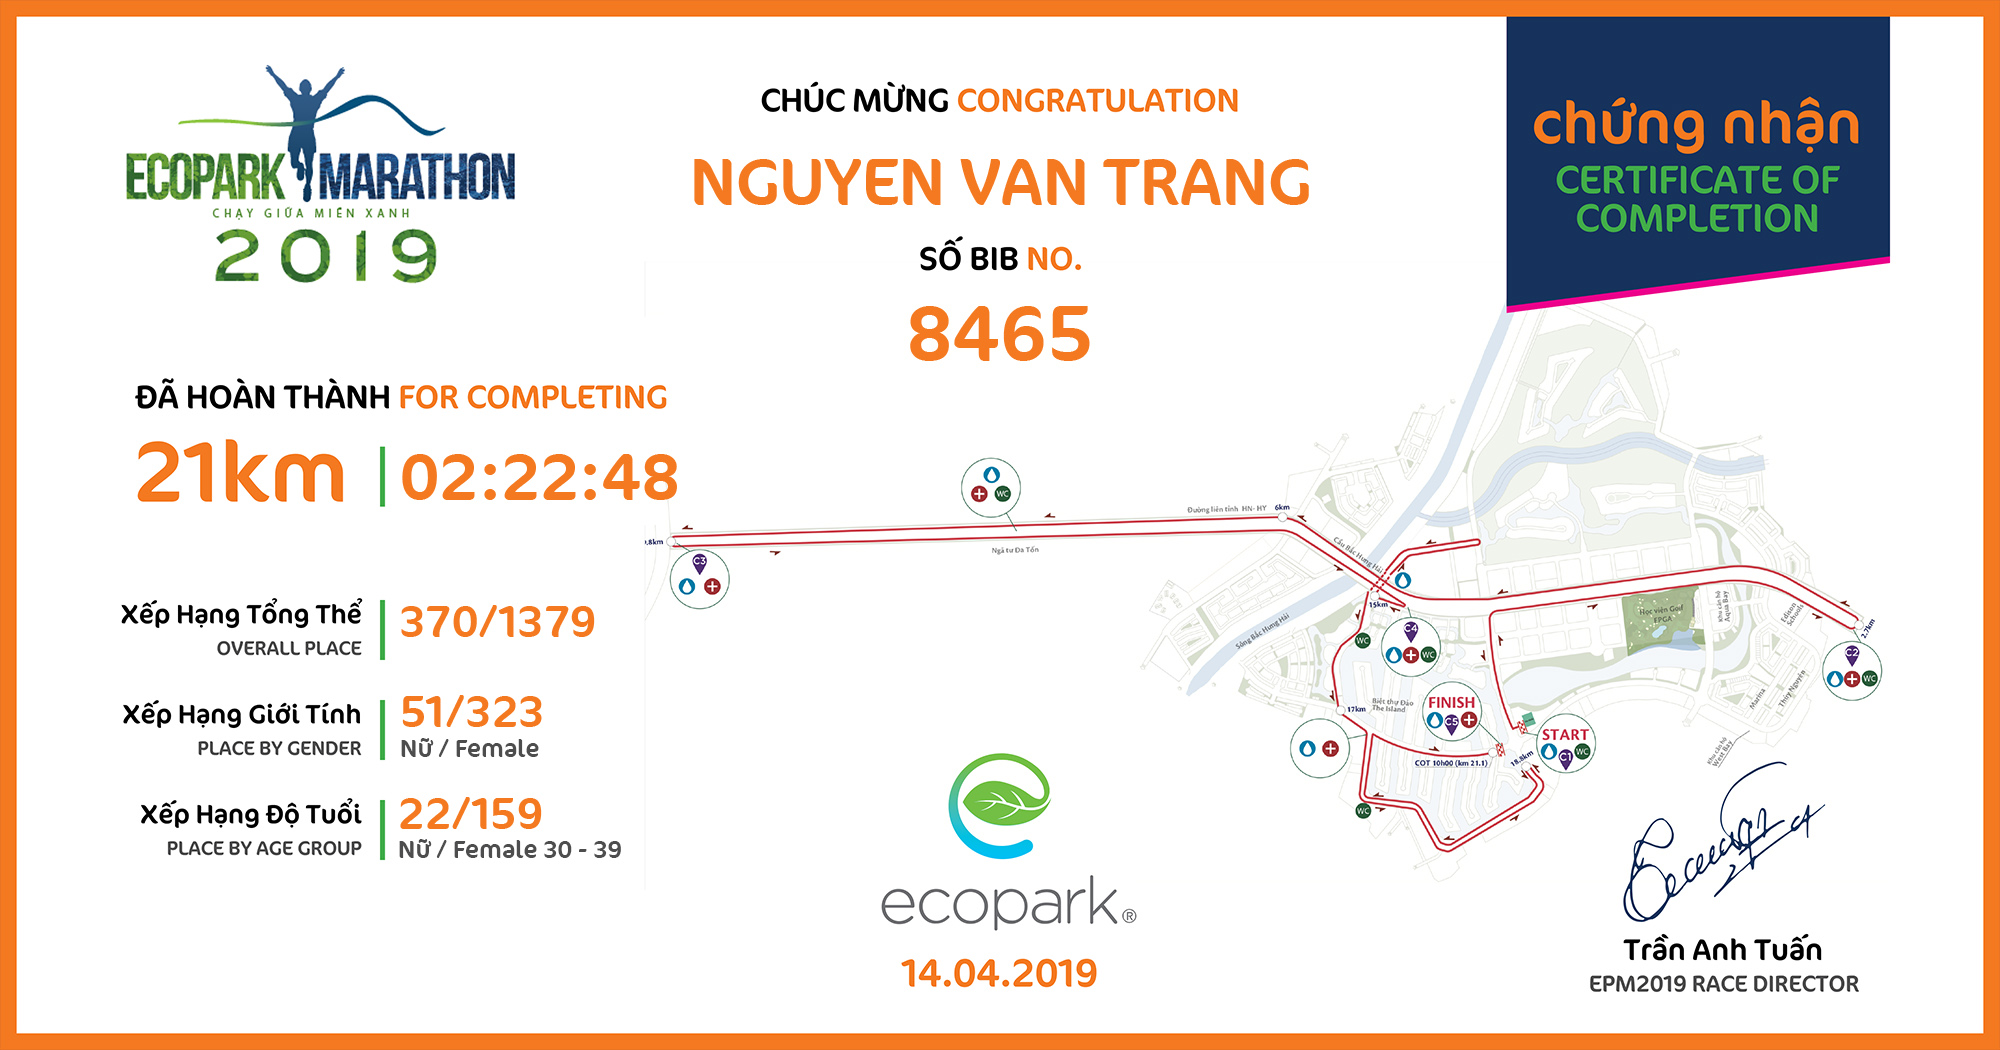 8465 - Nguyen Van Trang